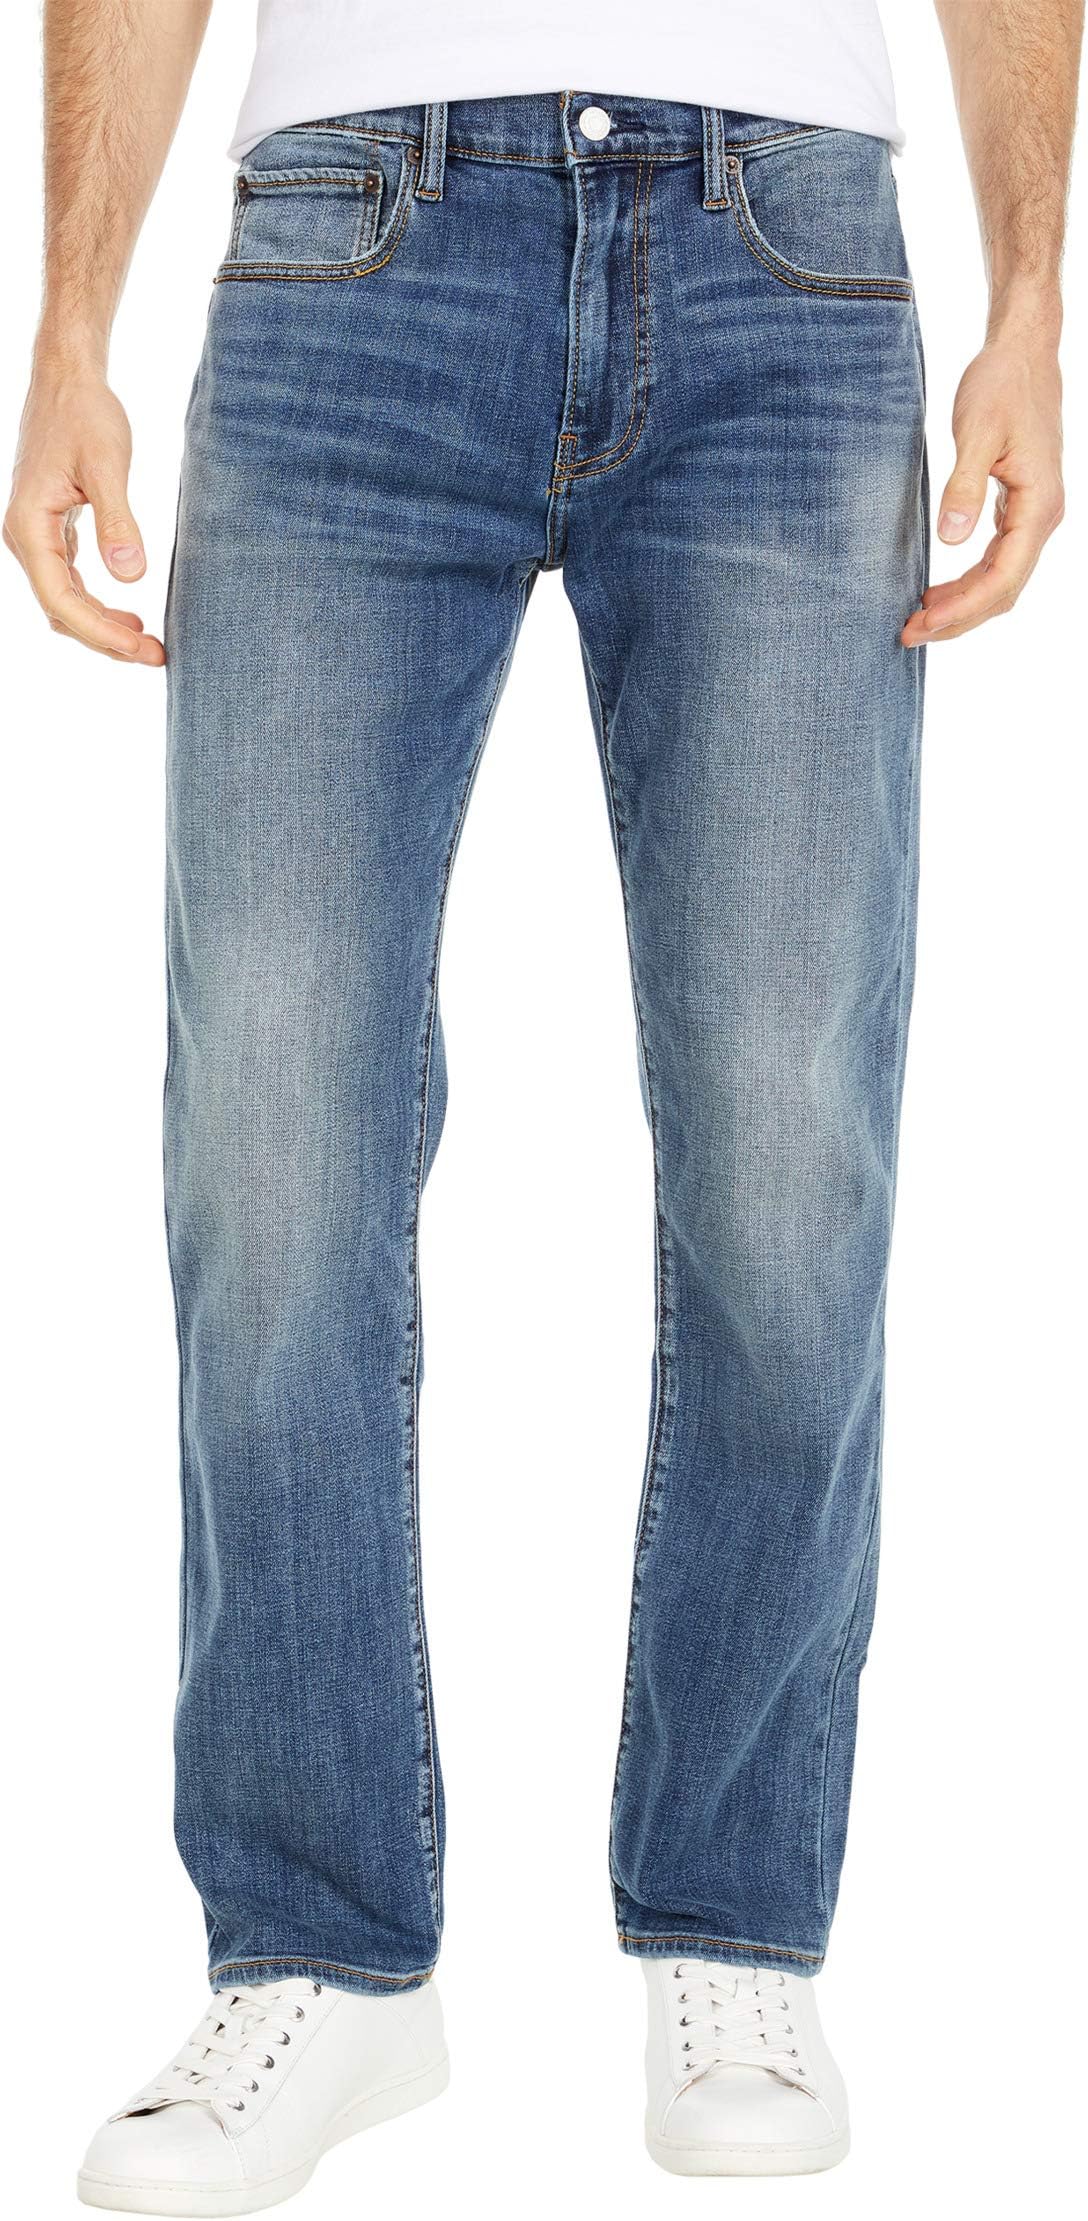 Джинсы 223 Straight Jeans in Harrison Lucky Brand, цвет Harrison george harrison george harrison wonderwall music